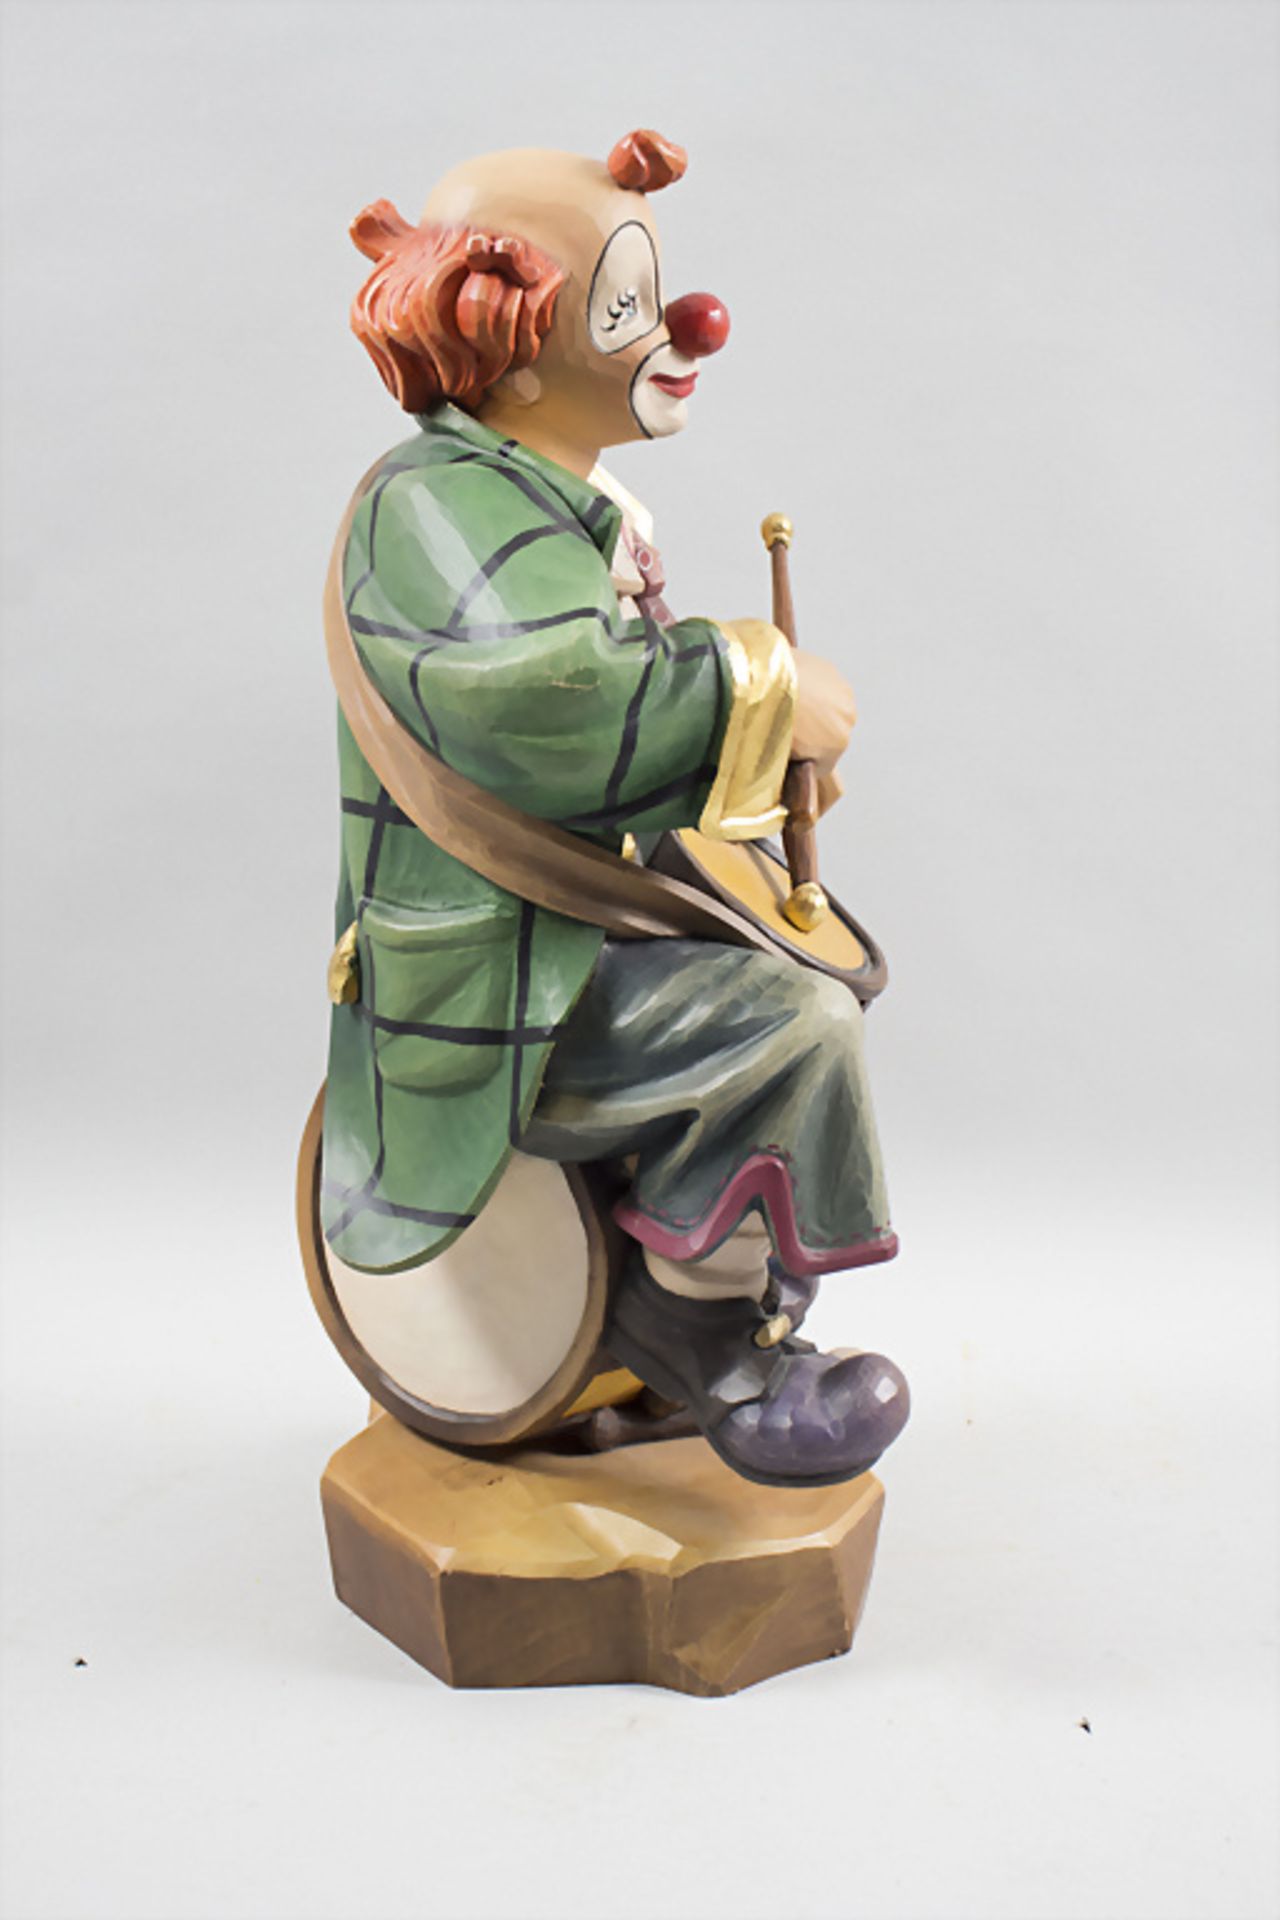 Holzskulptur 'Clown mit Trommel' / A wooden sculpture of a clown with drum, Oswald Dörr, 20. Jh. - Bild 5 aus 6